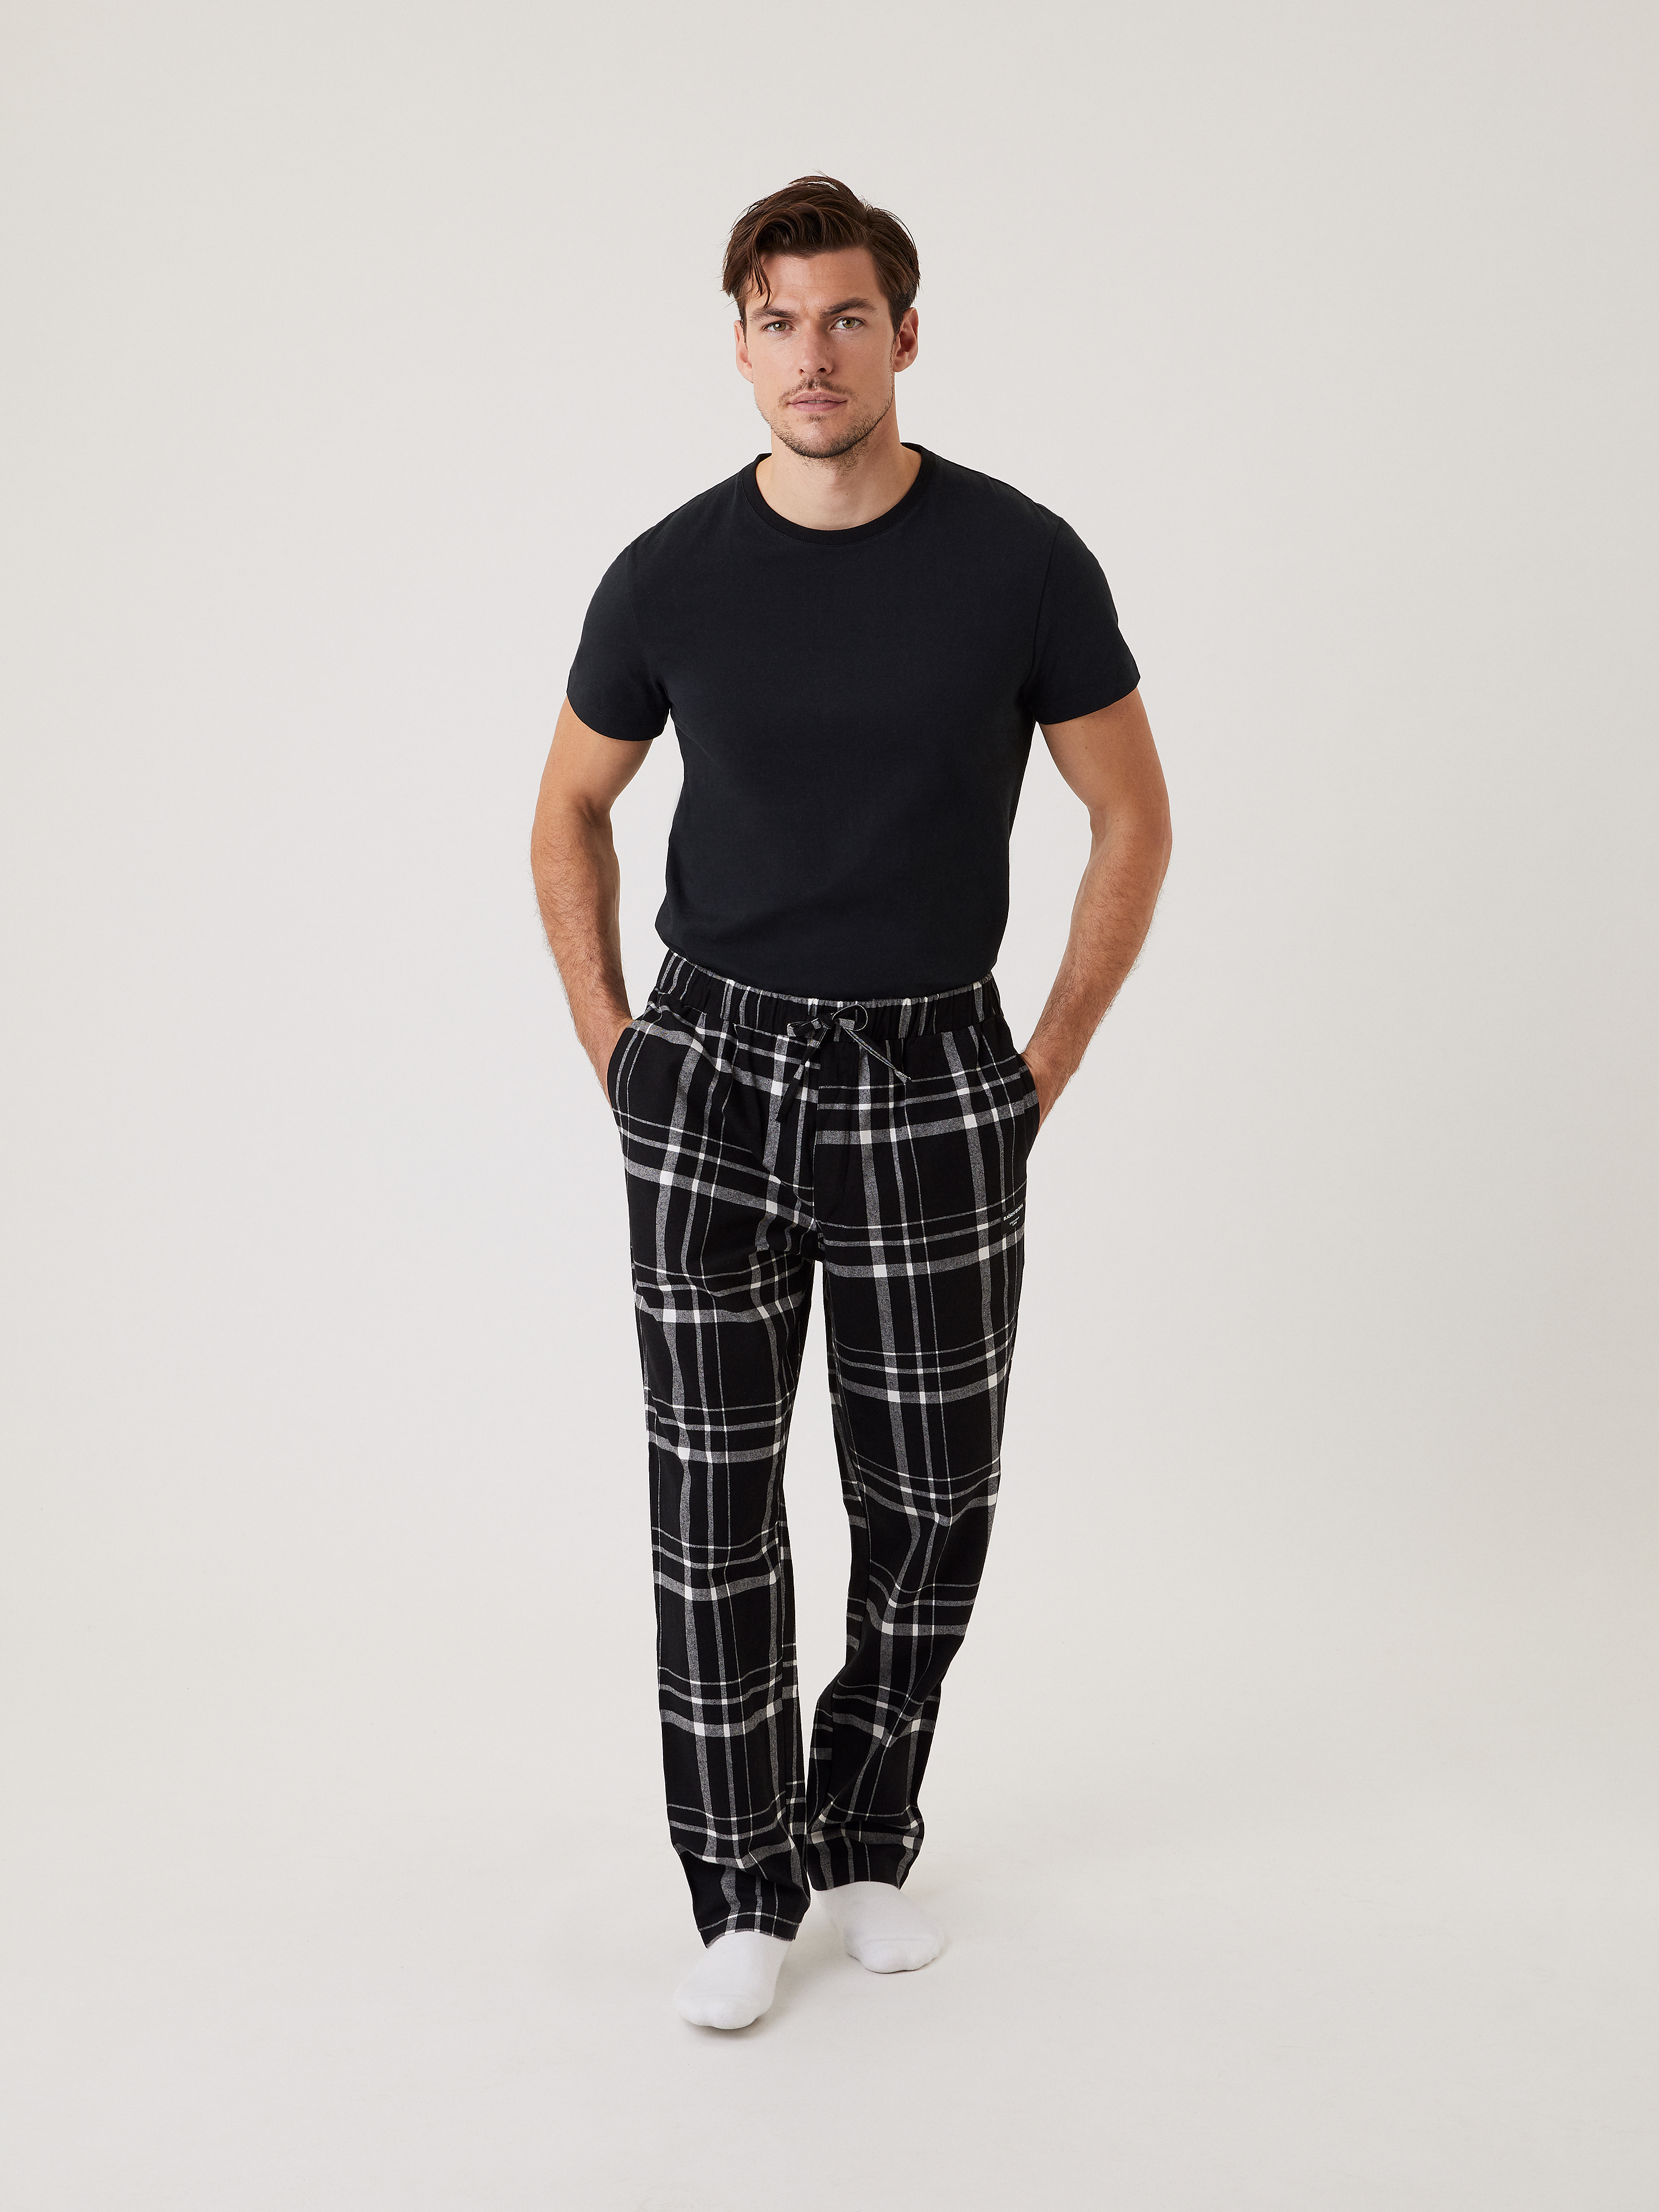 Pyjamas & Pyjama Pants for Men - Loungewear | Björn Borg